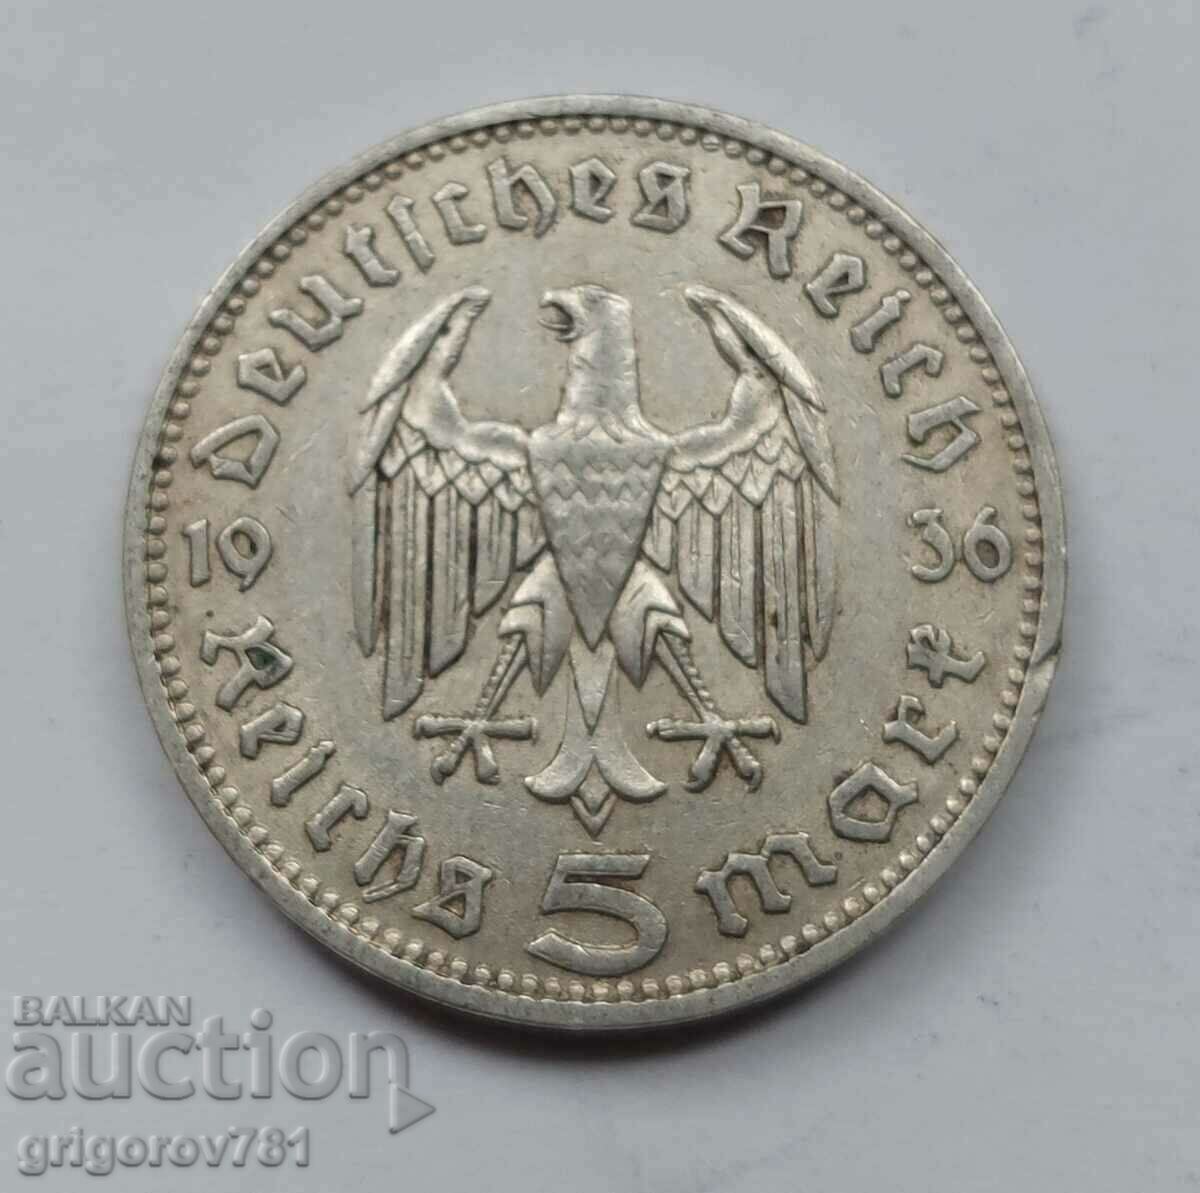 5 Mark Silver Γερμανία 1936 D III Reich Ασημένιο νόμισμα #20